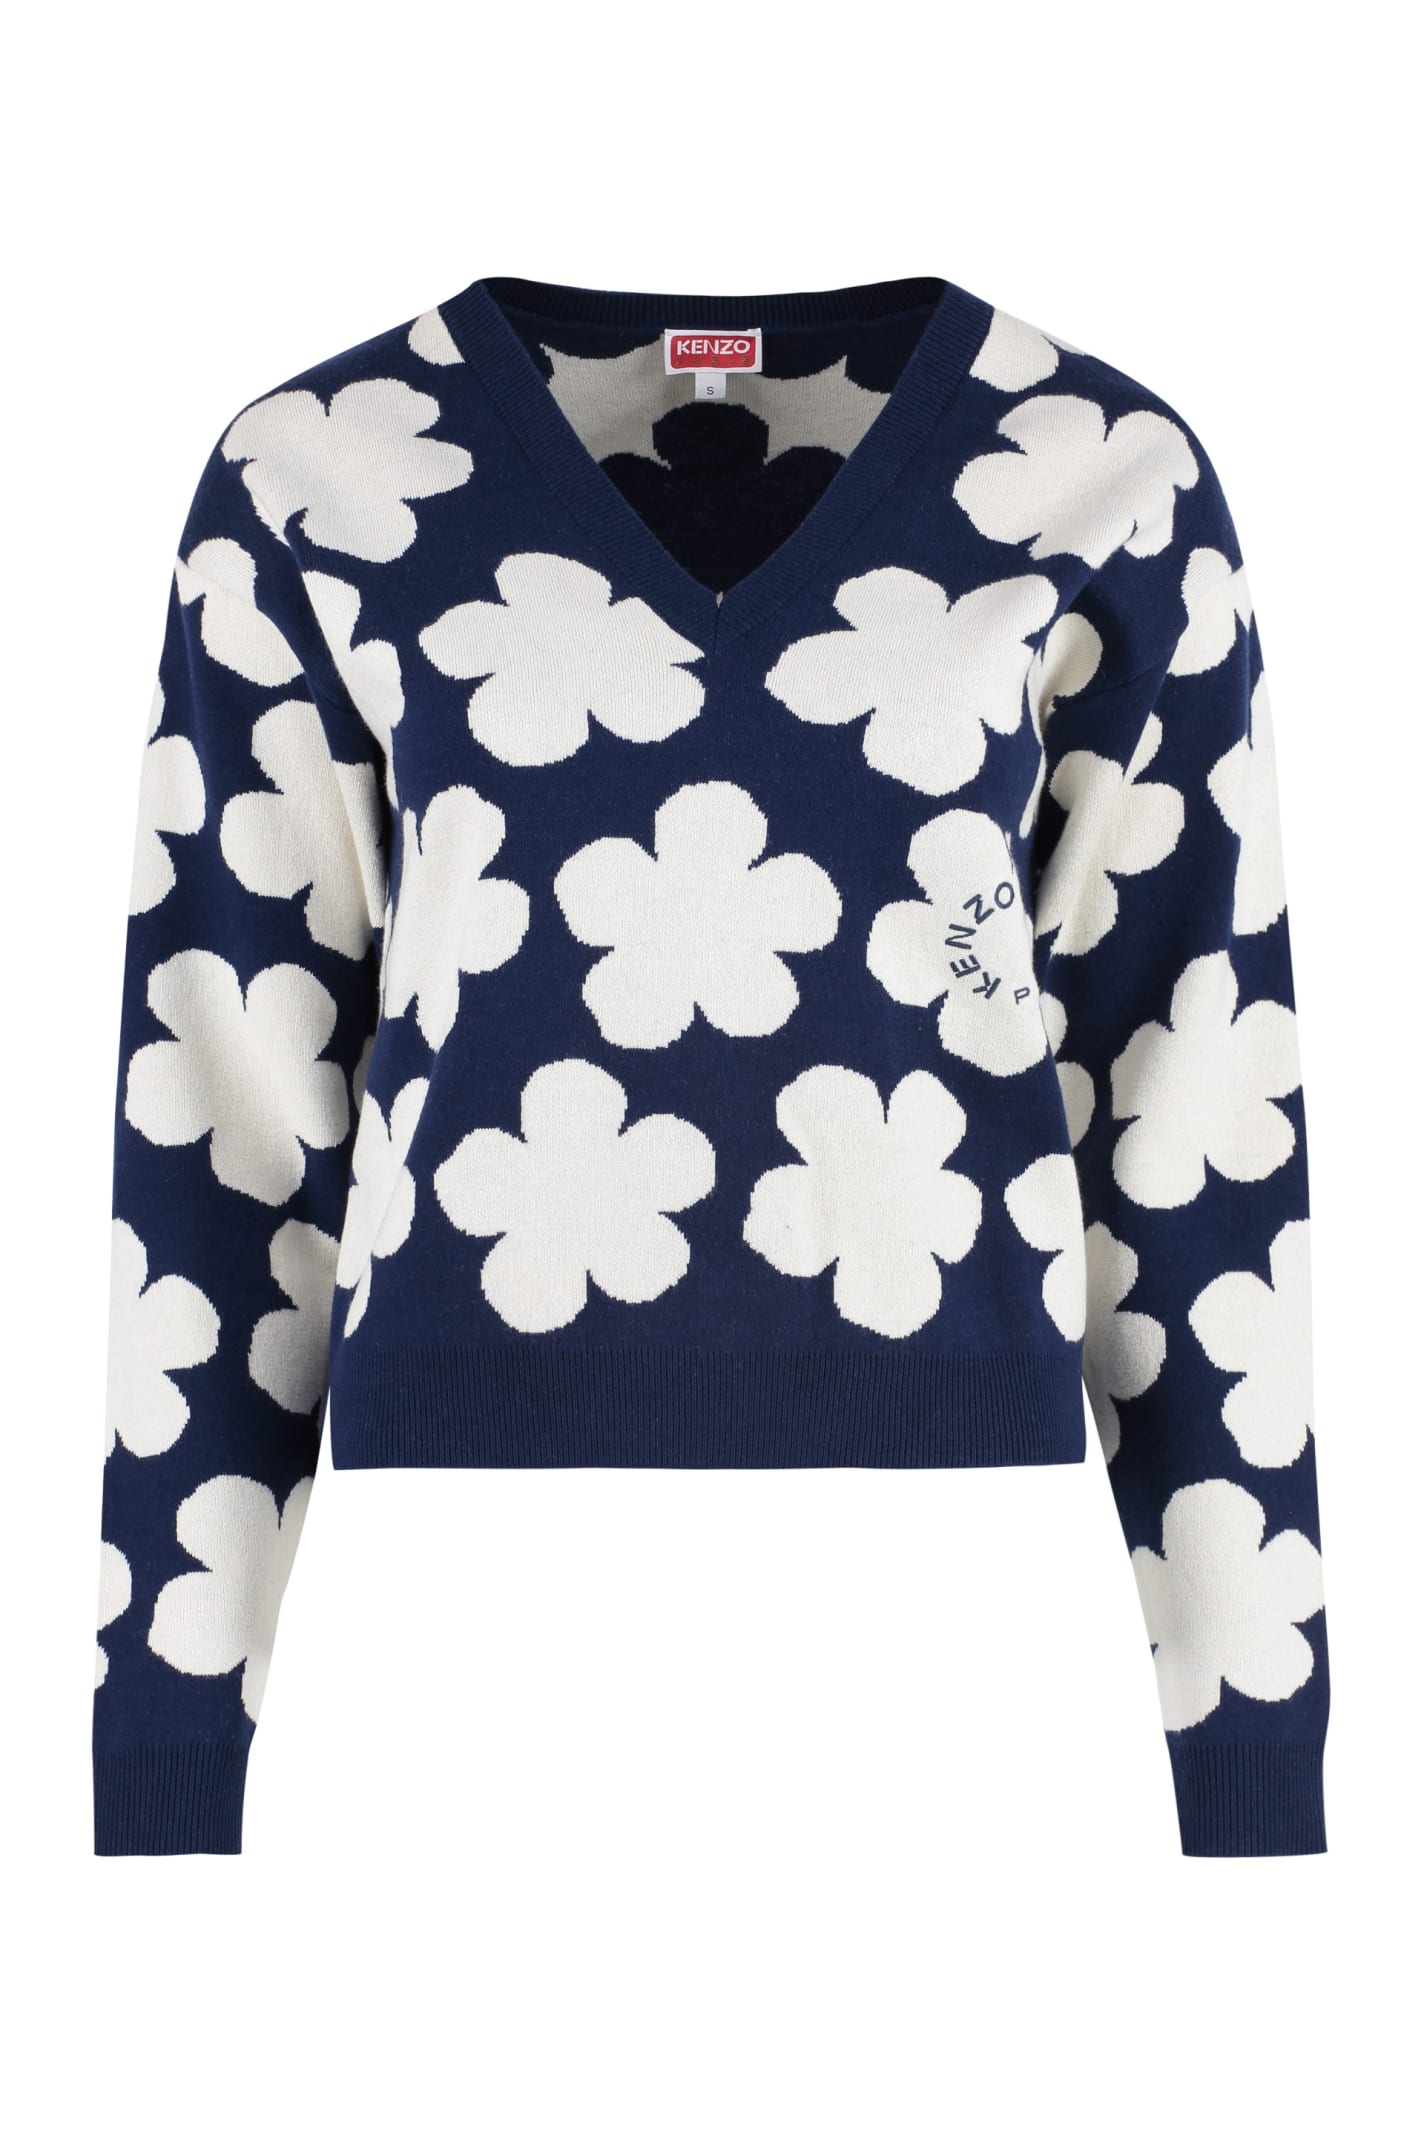 Kenzo Wool-cotton Blend Jacquard Sweater